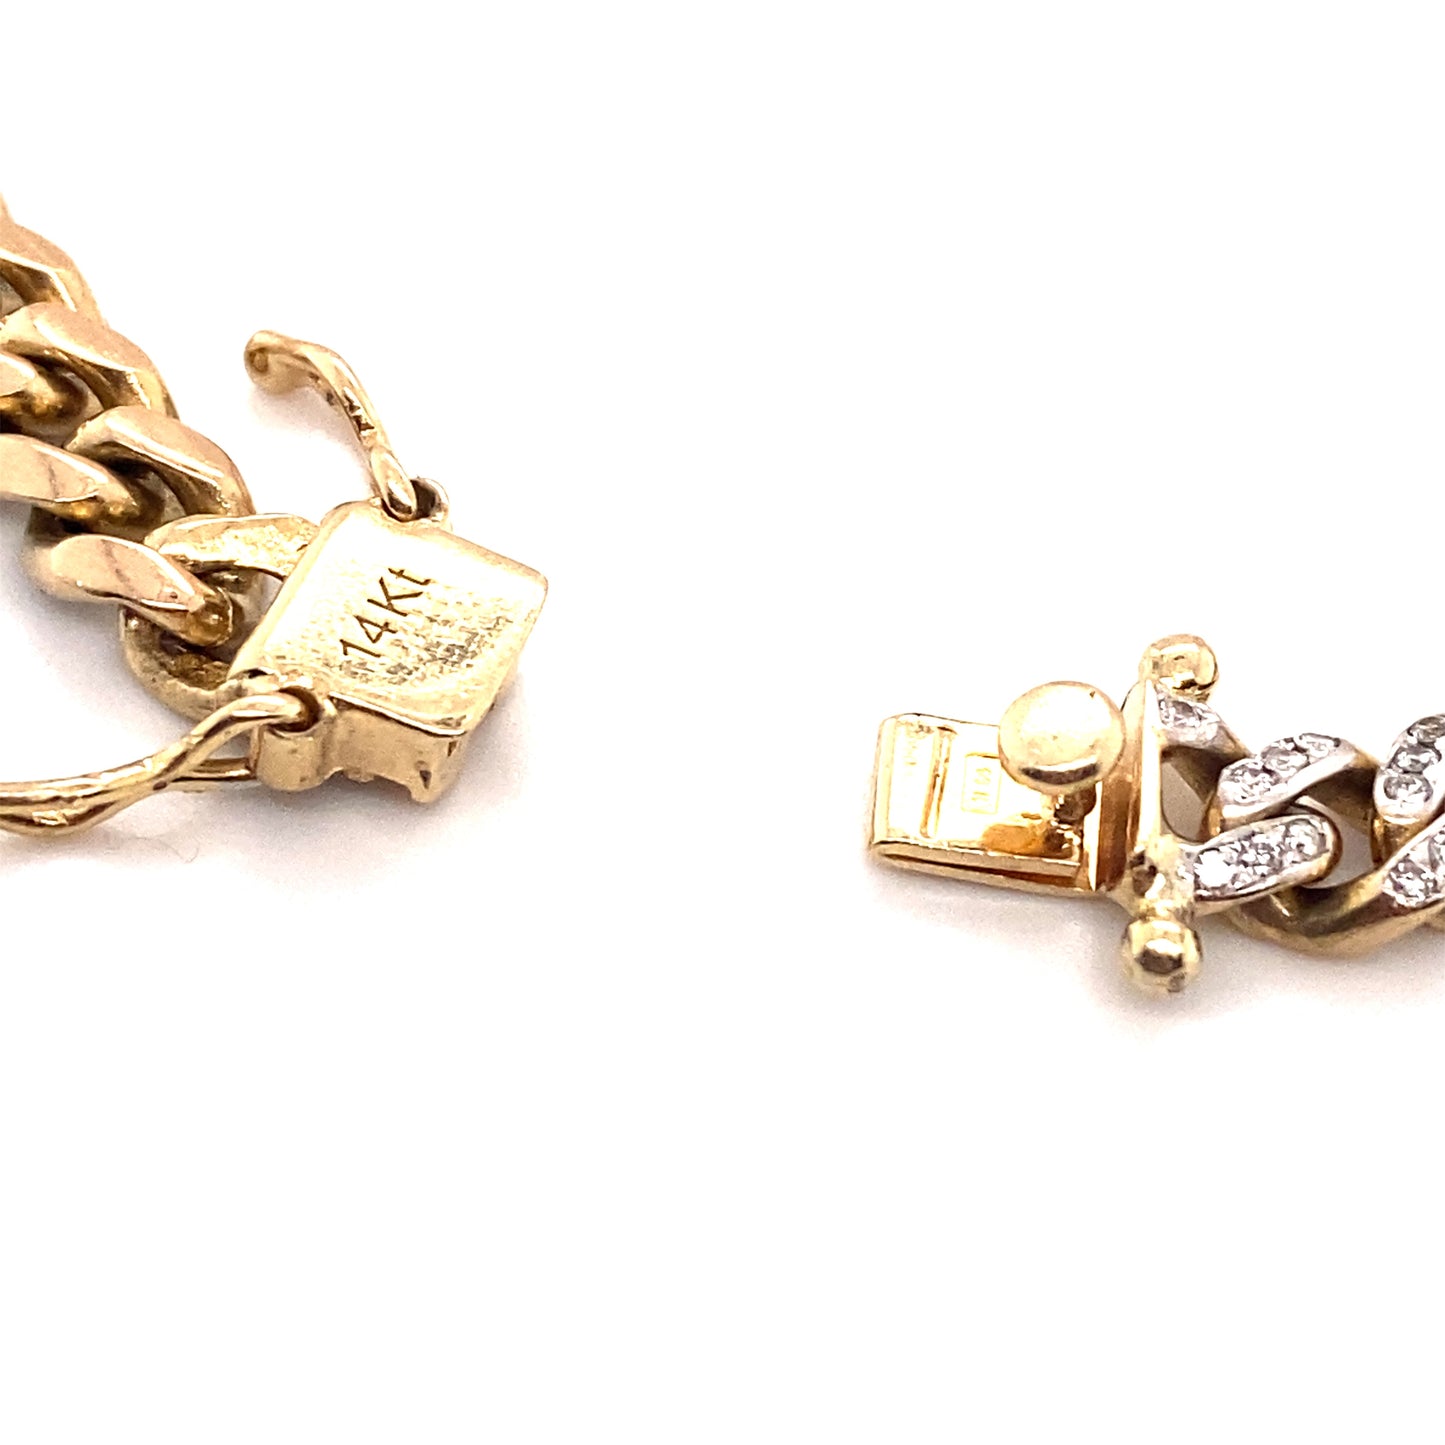 Circa 2000s 4.0 Carat Diamond Curb Link Chain Bracelet in 14K Gold